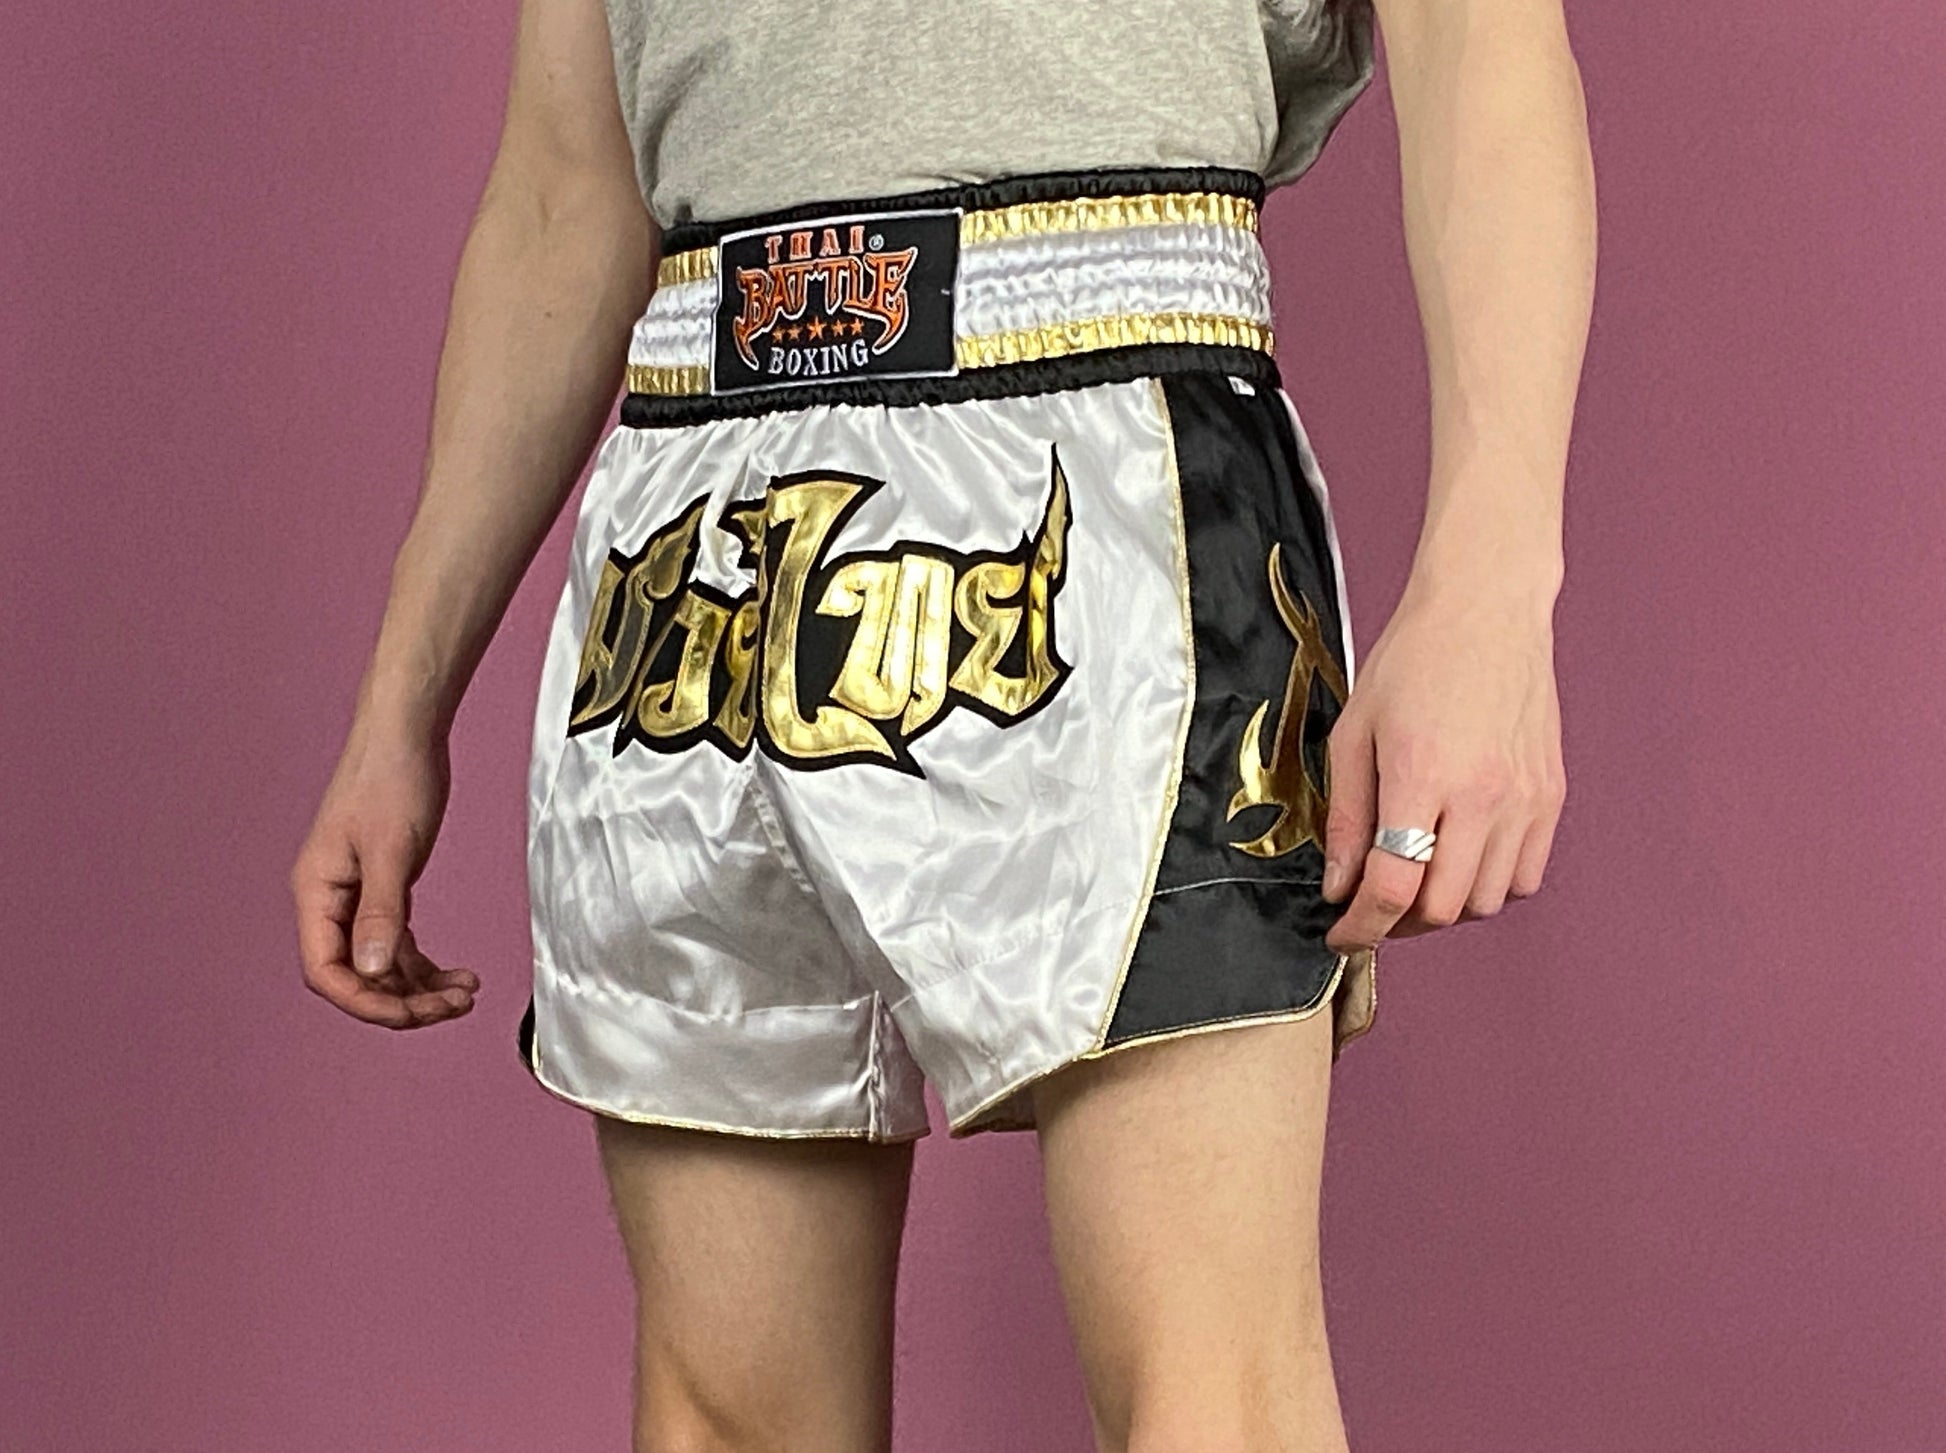 90s Battle Vintage Men's Muay Thai Boxing Shorts - Medium White Nylon